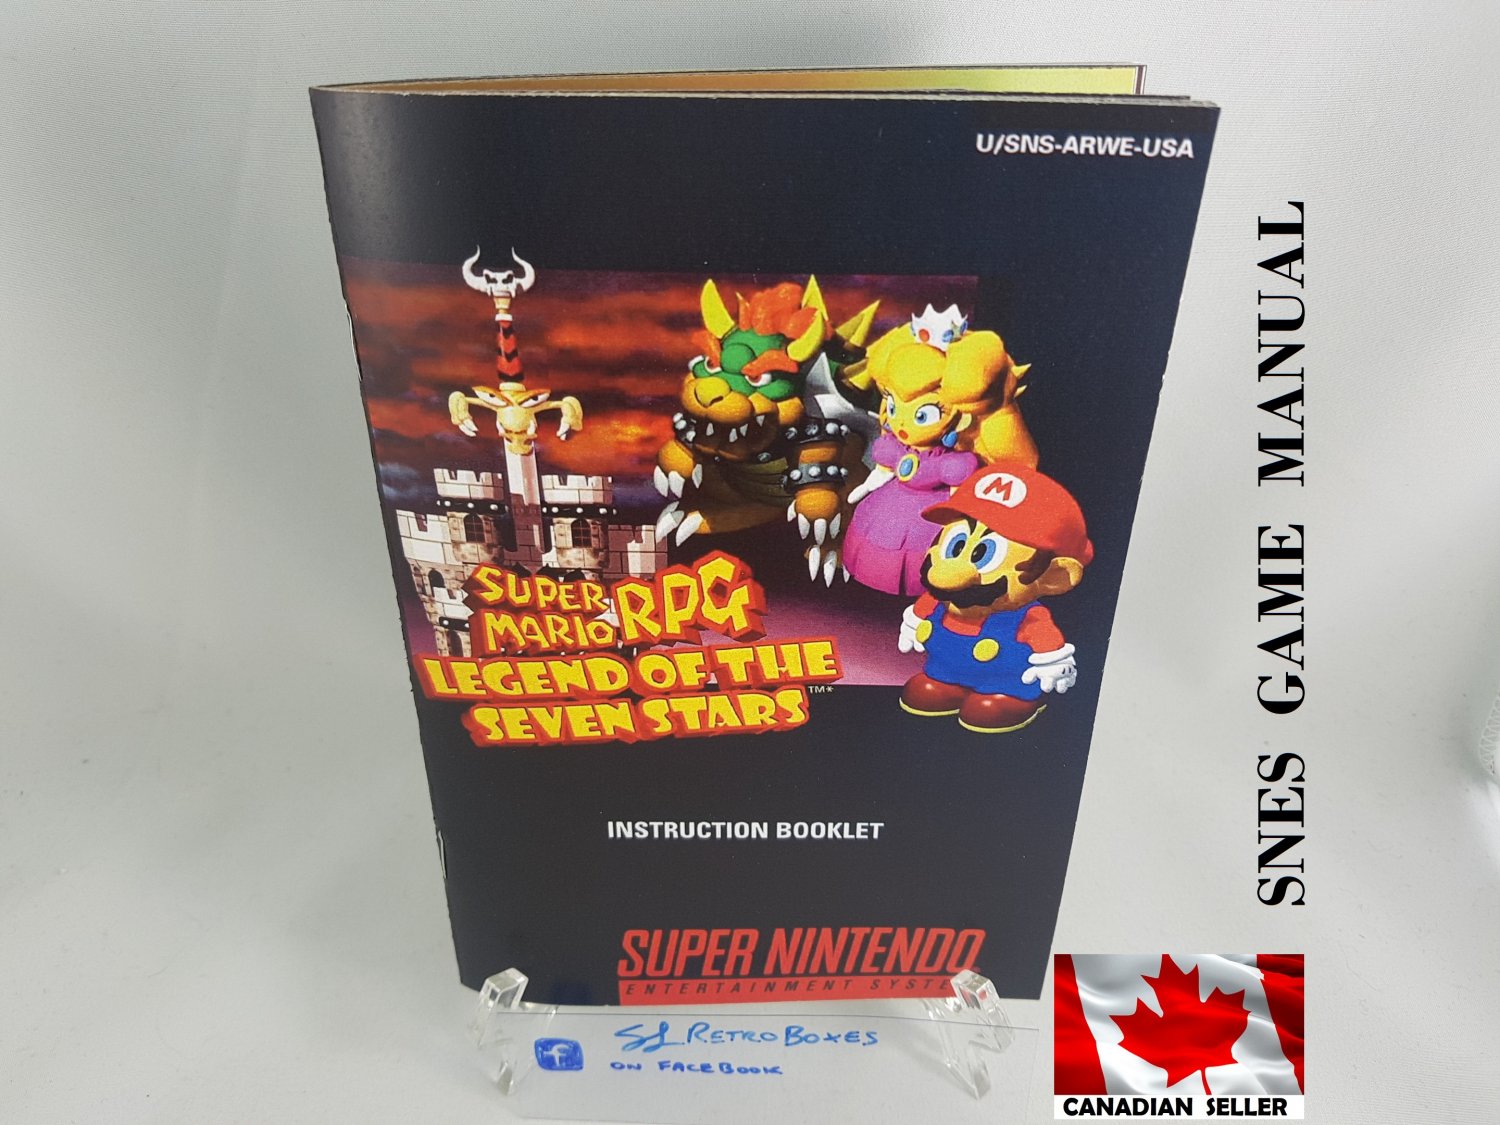 MANUAL SNES - SUPER MARIO RPG LEGEND OF SEVEN STARS - Super Nintendo Instruction Manual Booklet